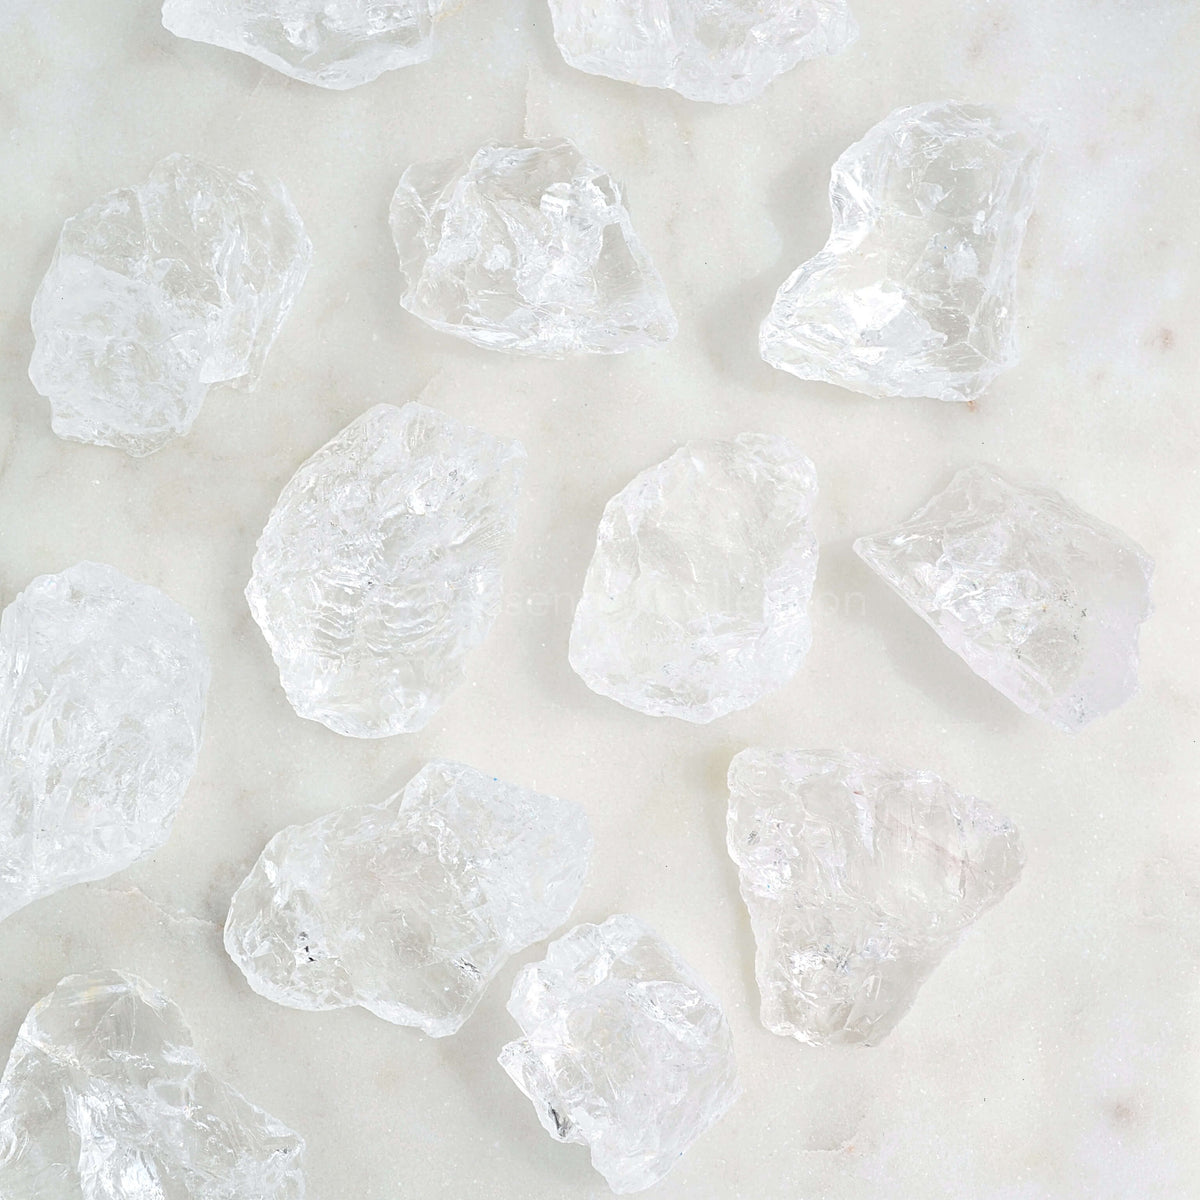 raw rough clear quartz crystals